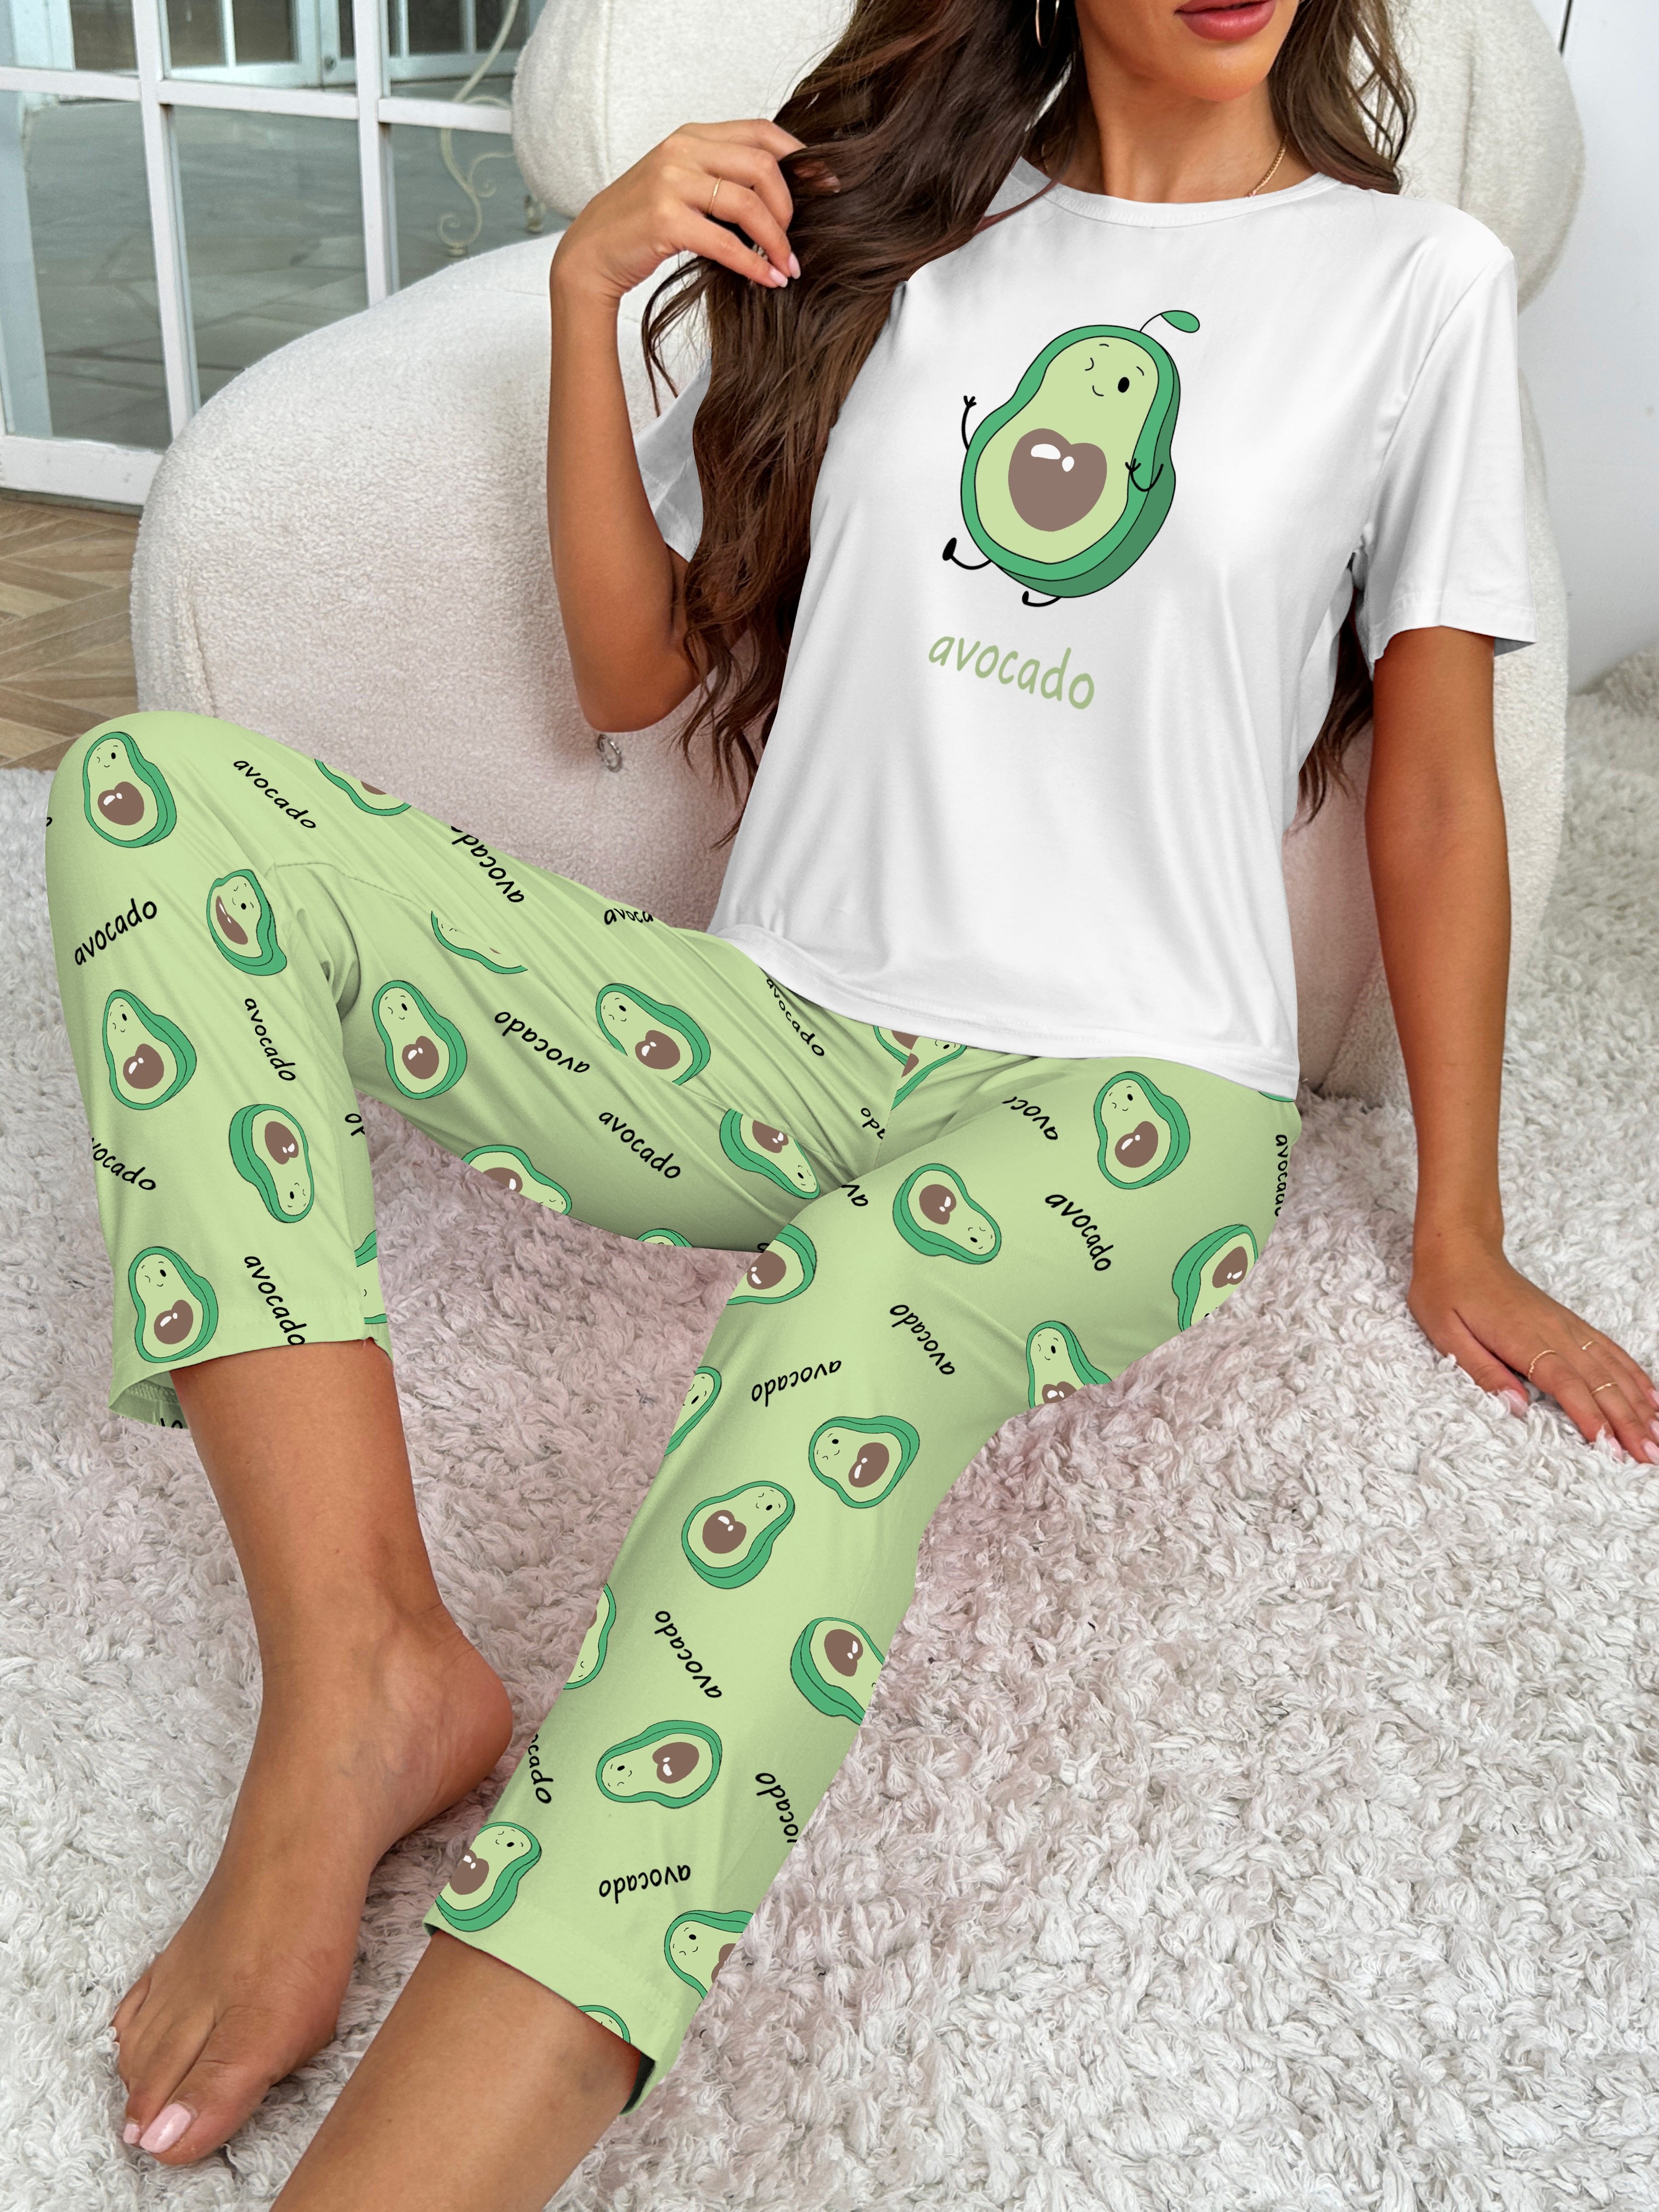 Avocado Cotton Pajama Set For Women Comfortable Pep Sleepwear For